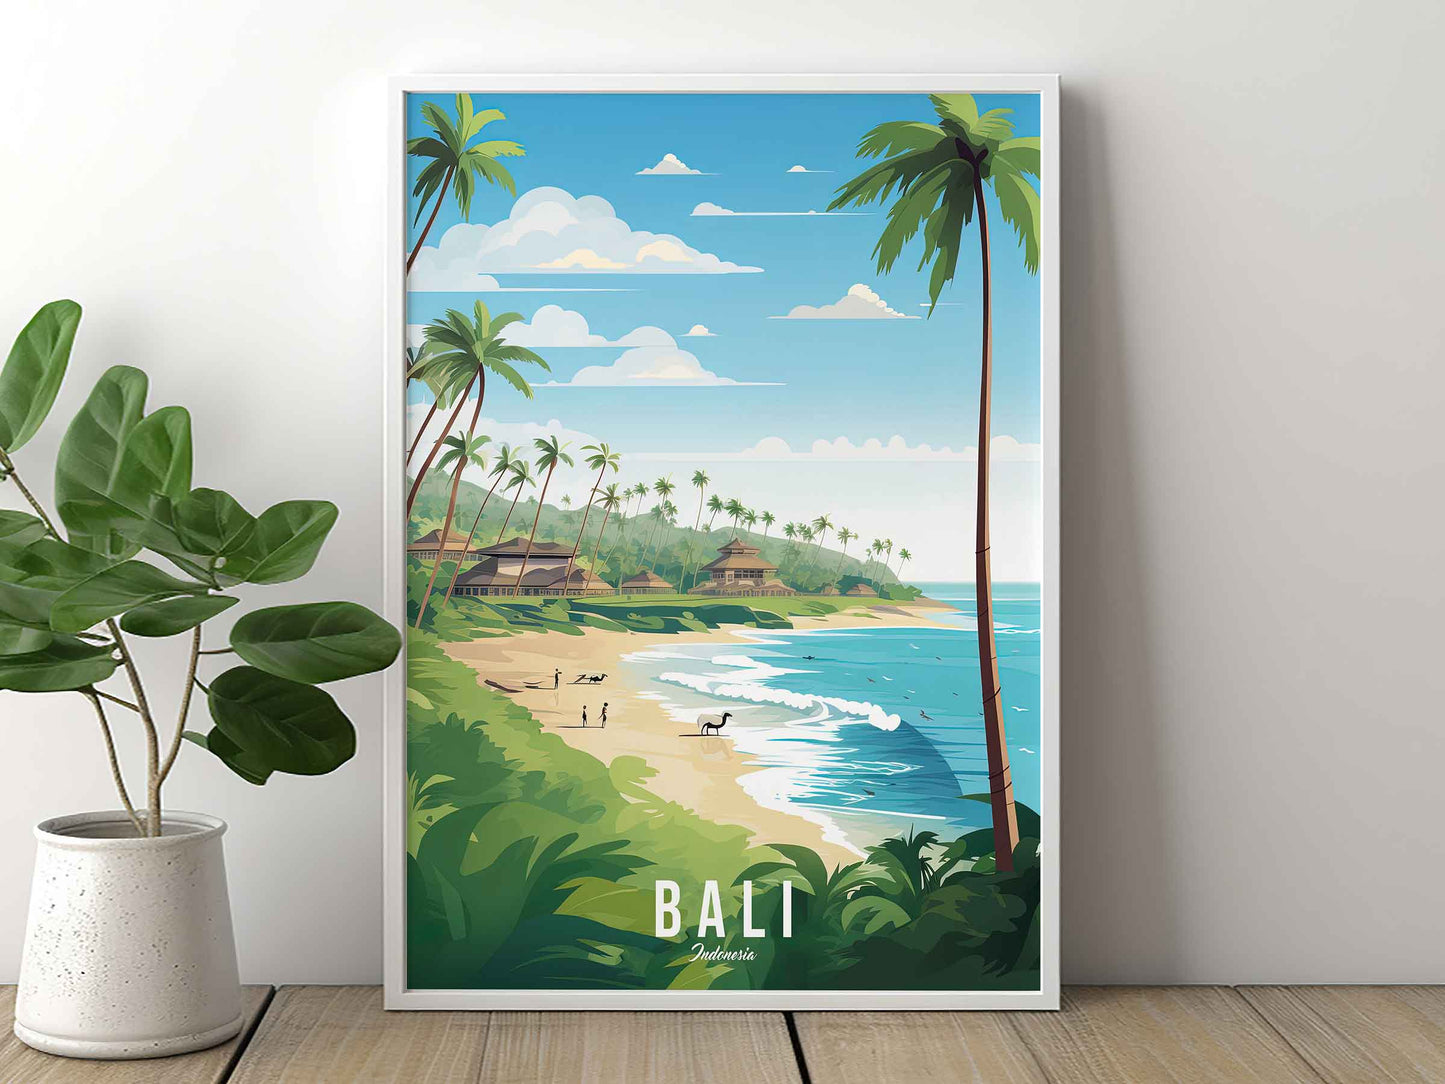 Framed Image of Bali Indonesia Illustration Travel Poster Prints Wall Art